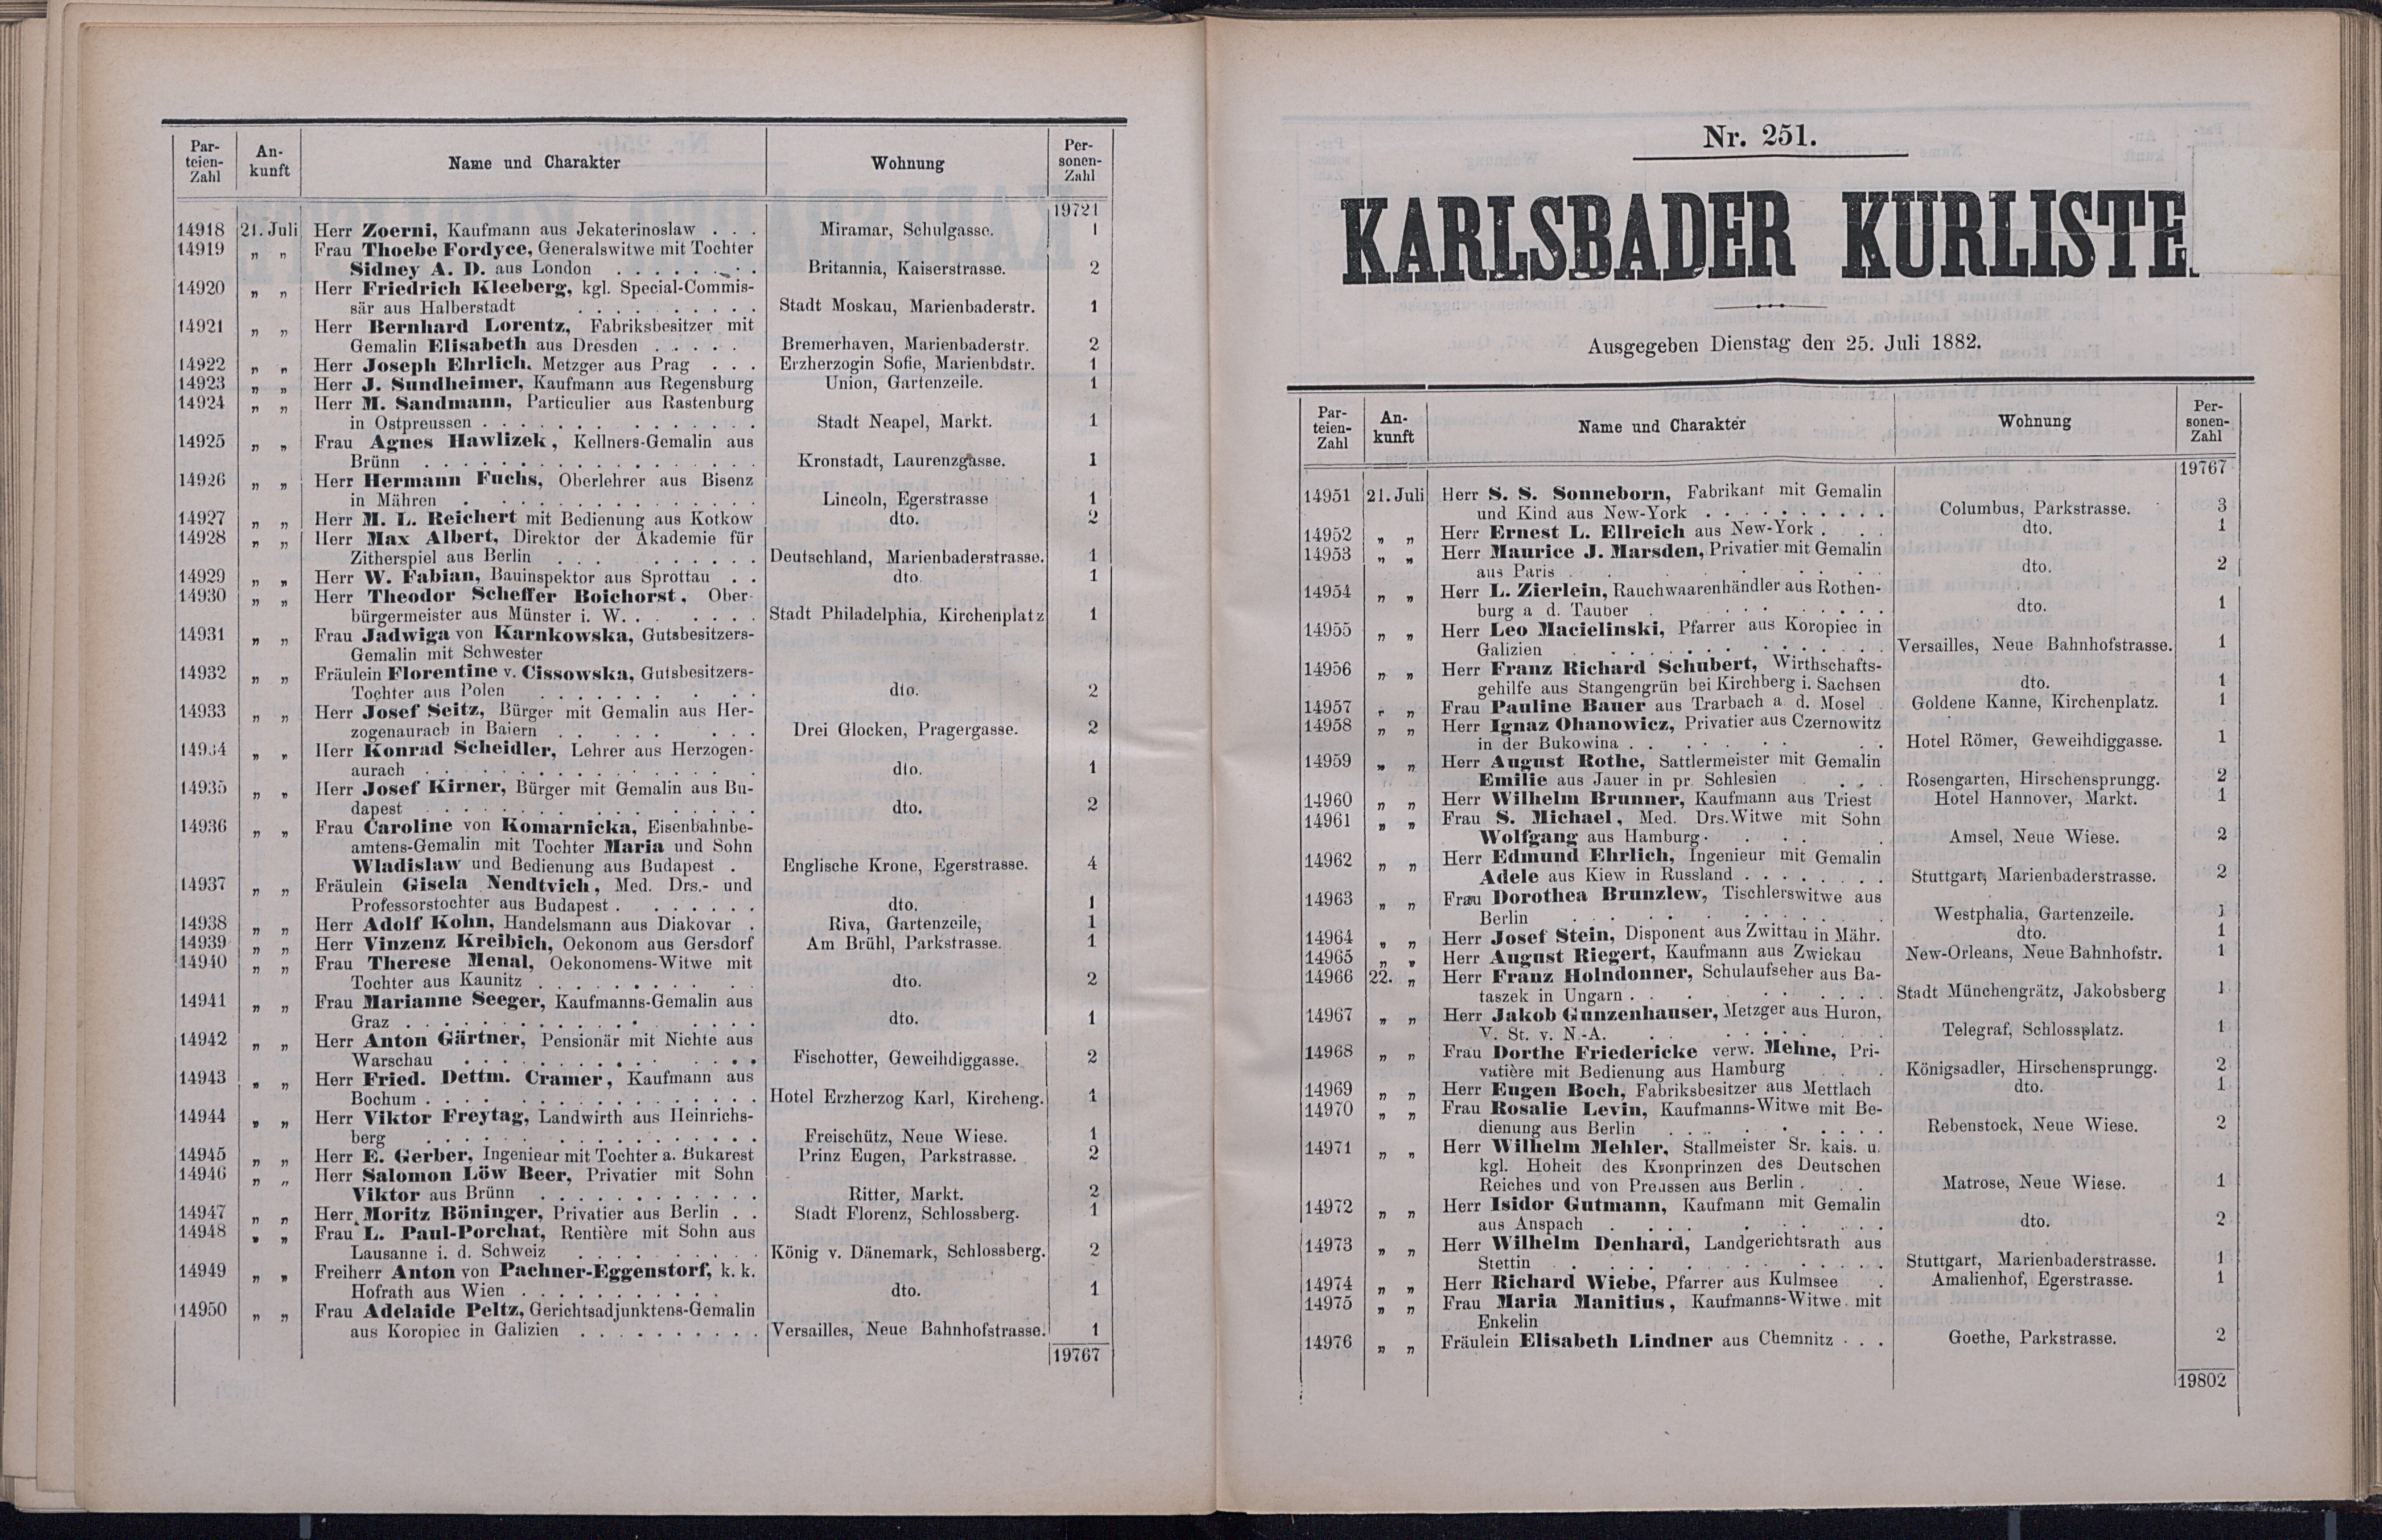 298. soap-kv_knihovna_karlsbader-kurliste-1882_2990